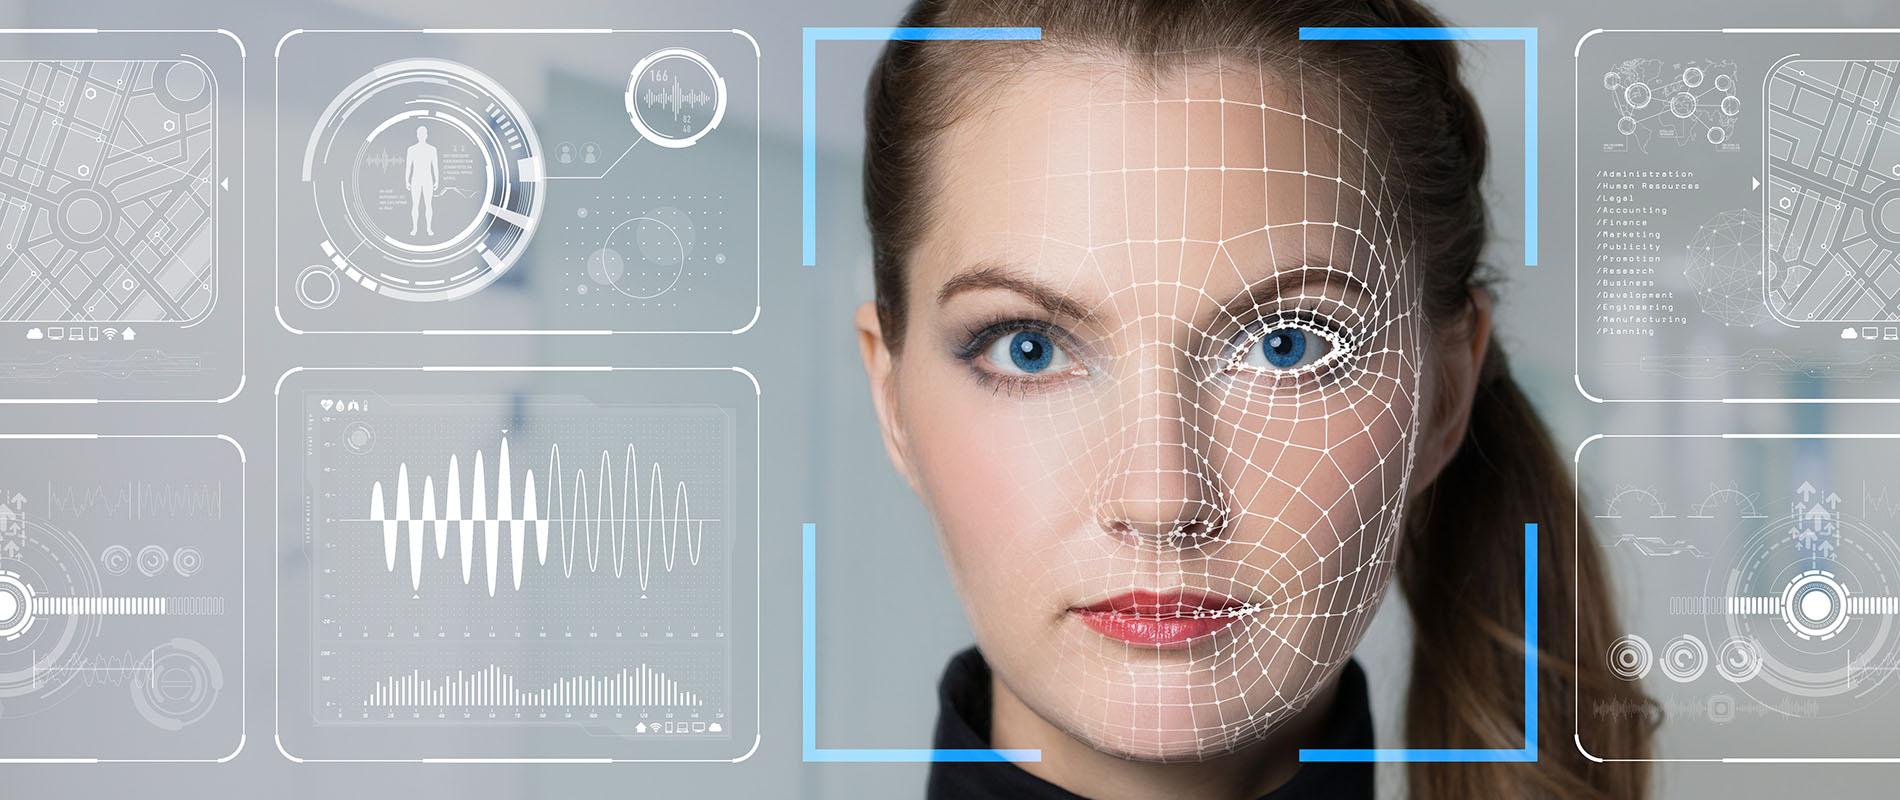 biometria-identidad-usuario-seguridad-banca-digital-tecnologia-BBVA